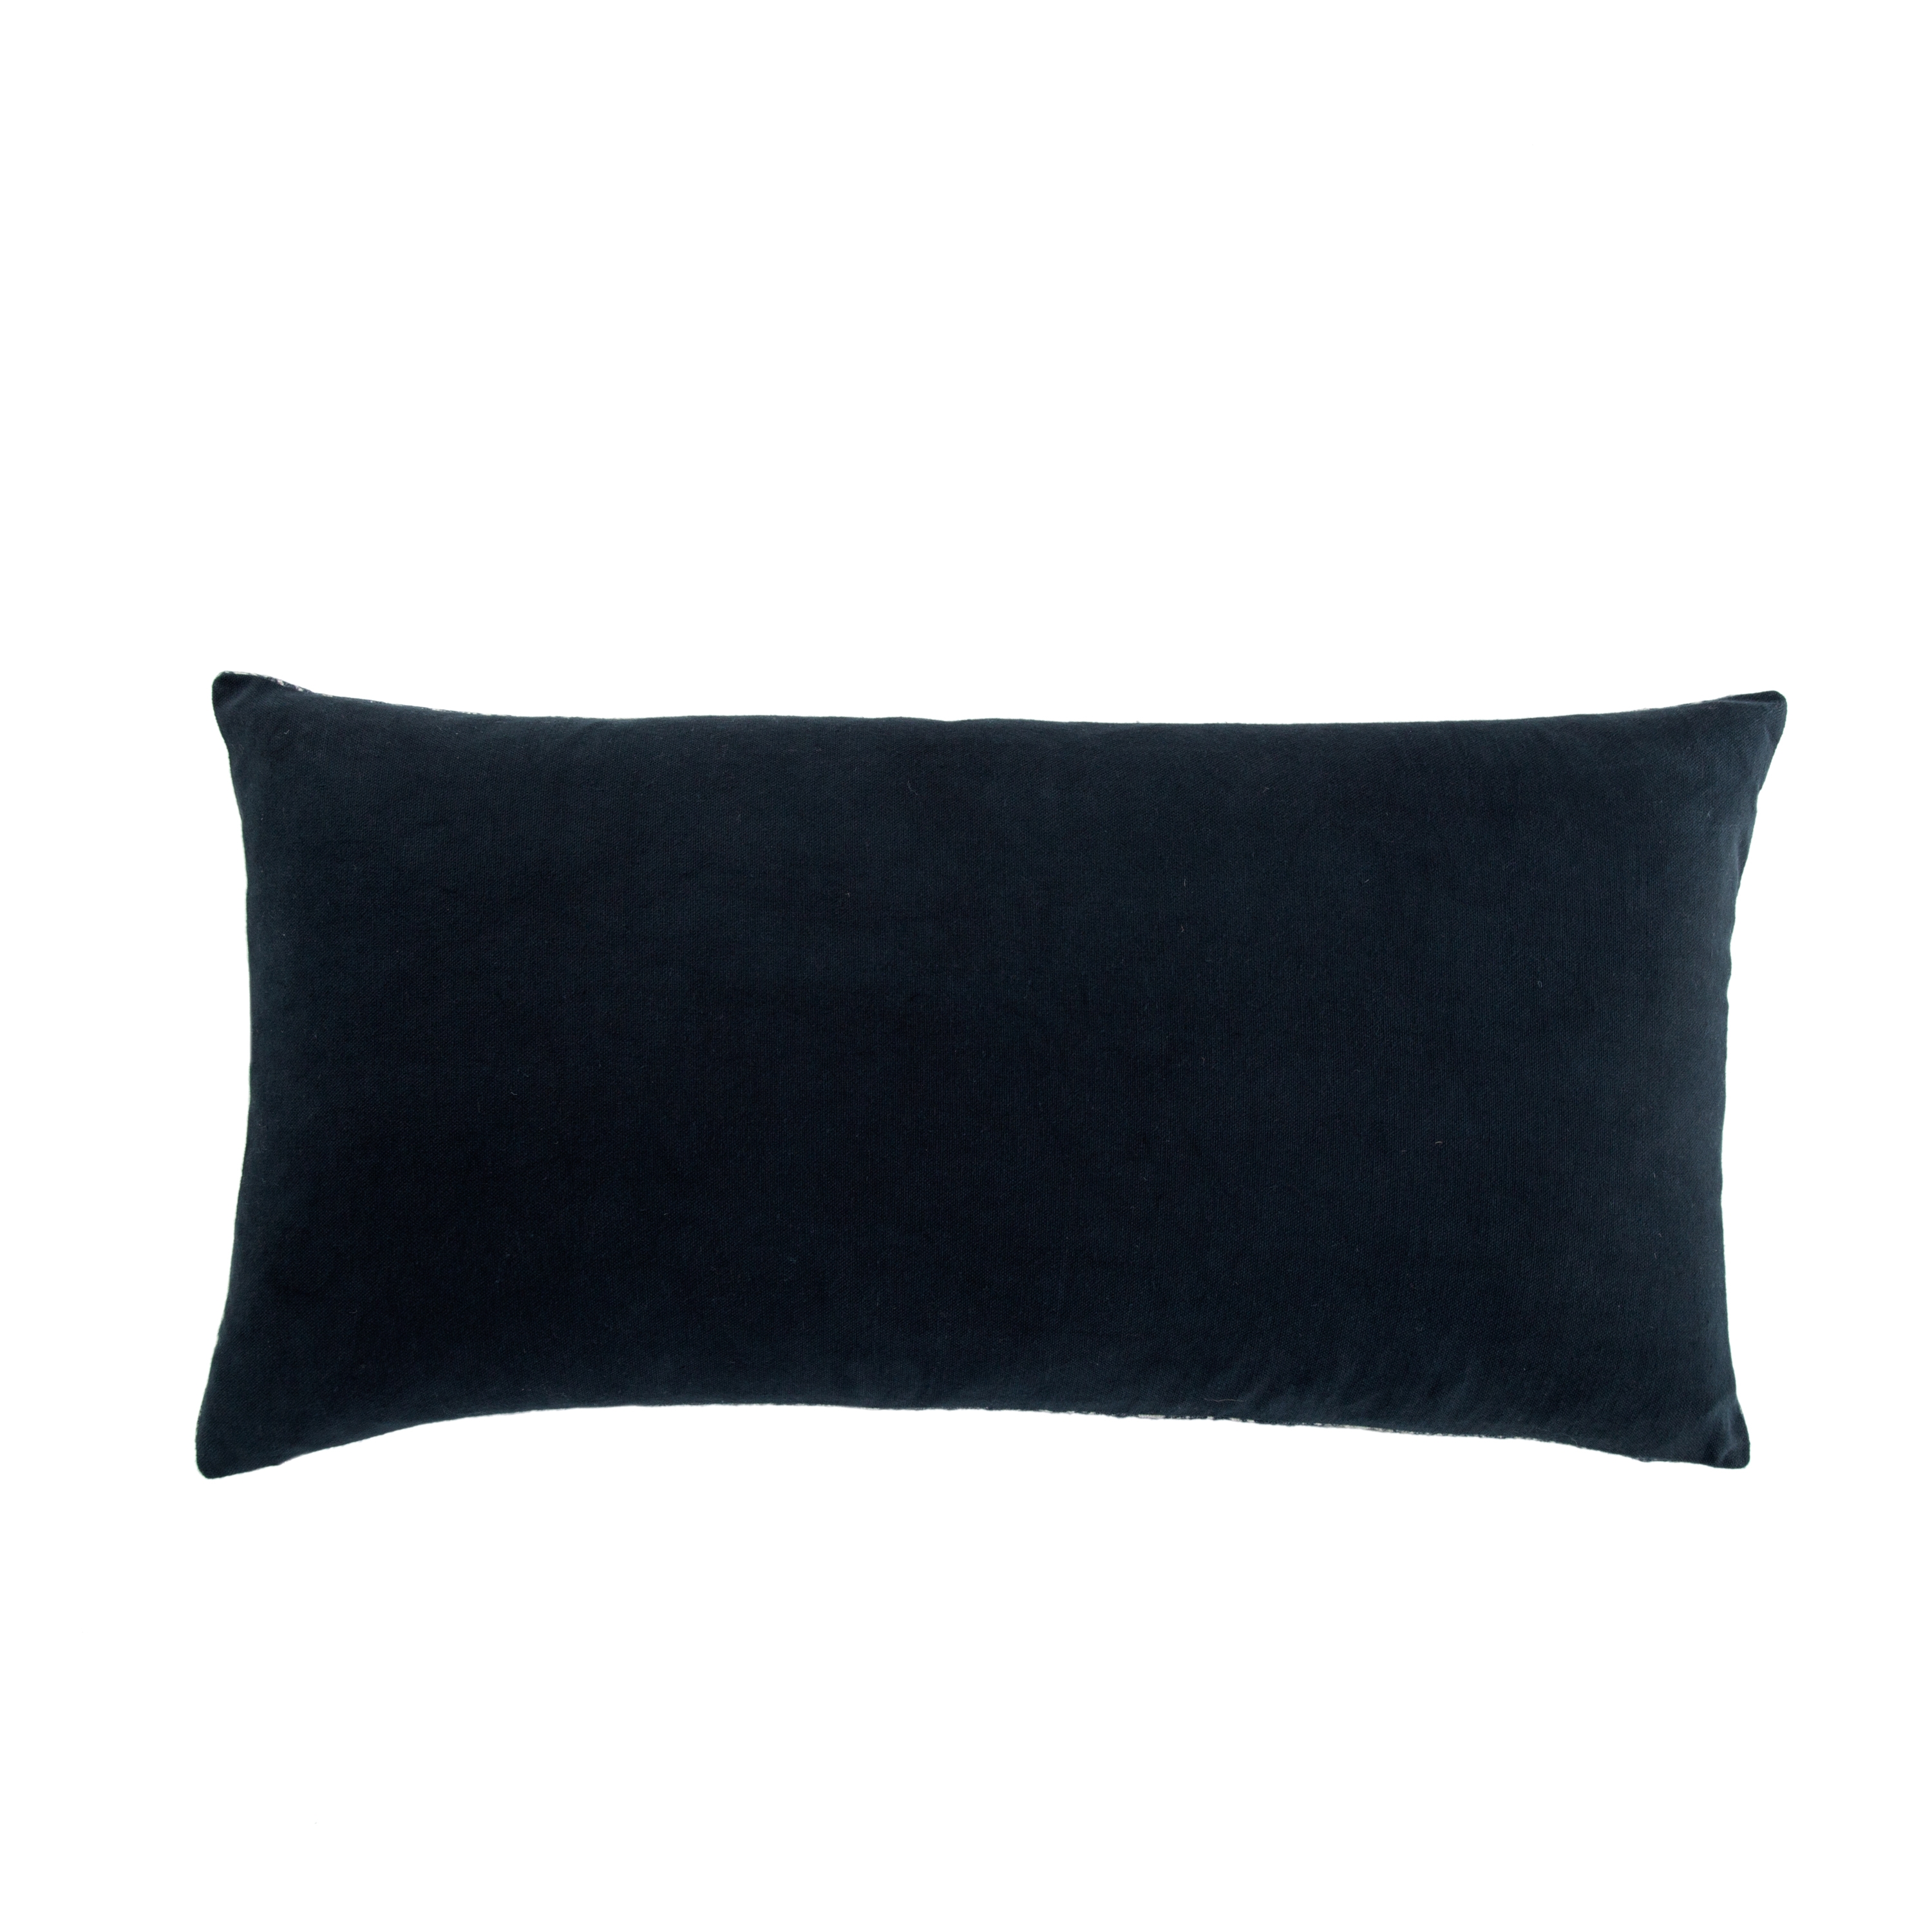 Design (US) Indigo 12"X24" Pillow - Image 1